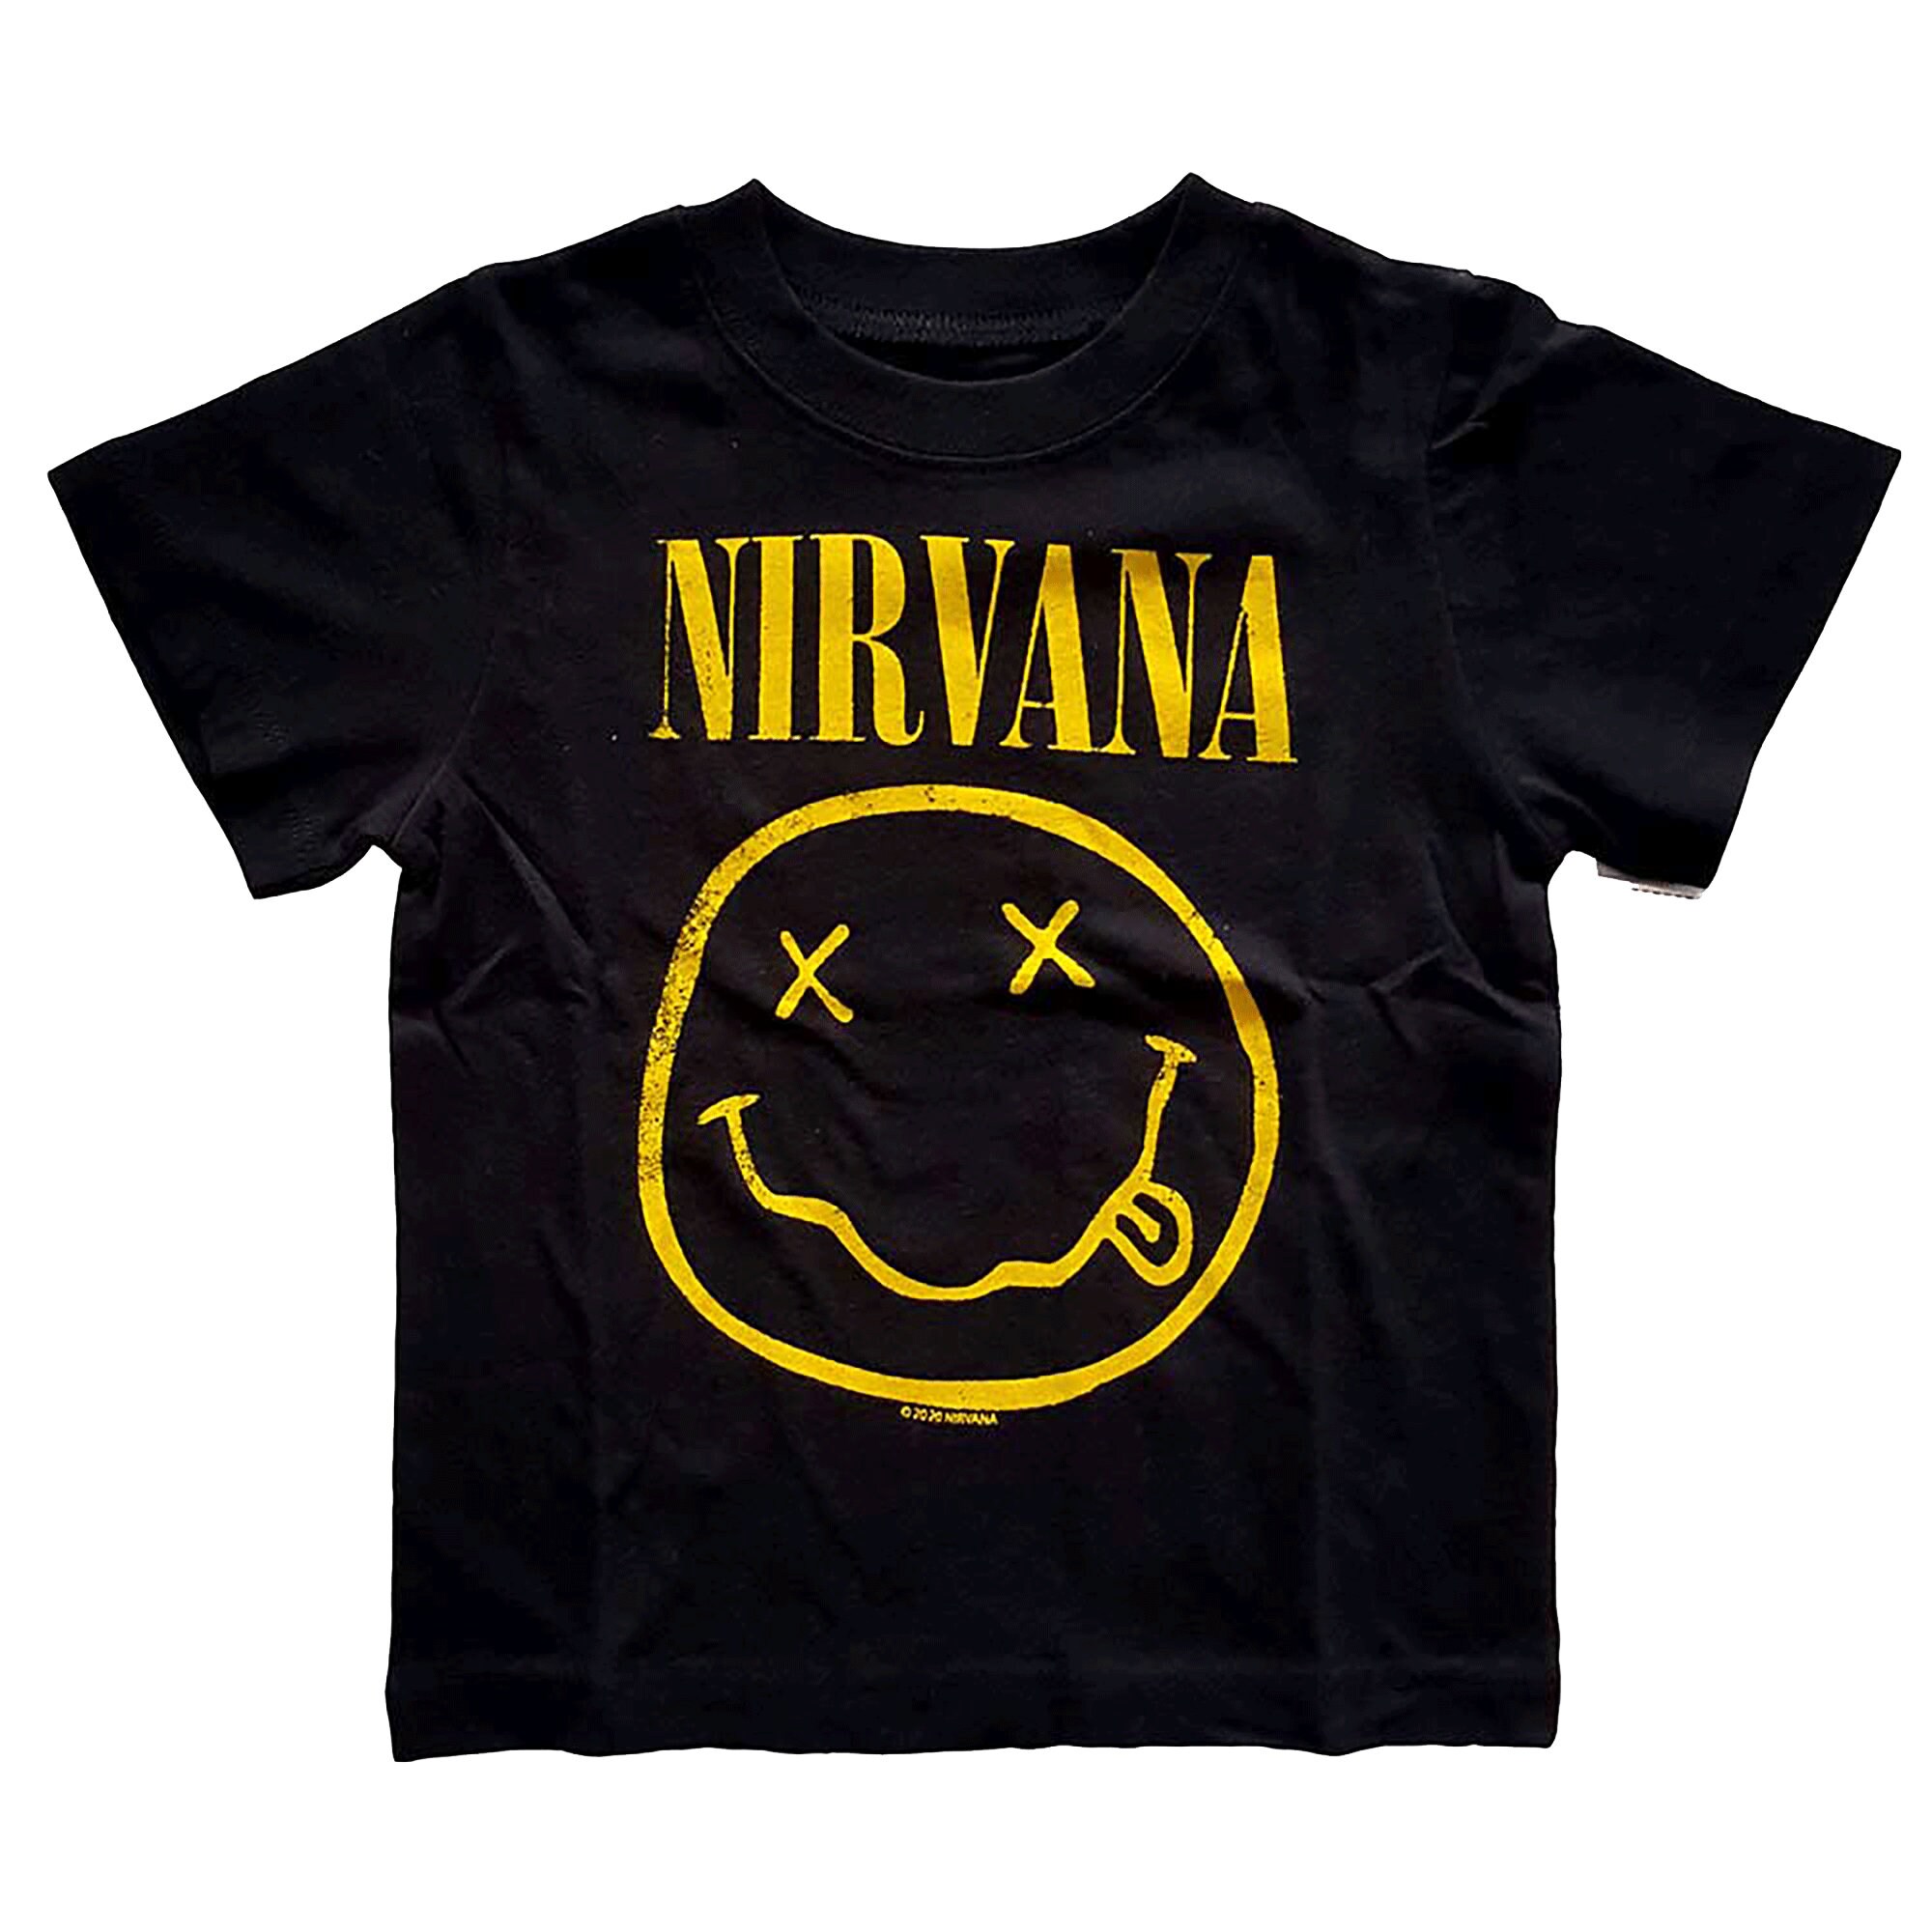 Discover Kids Nirvana T-Shirt, Kurt Cobain T-Shirt